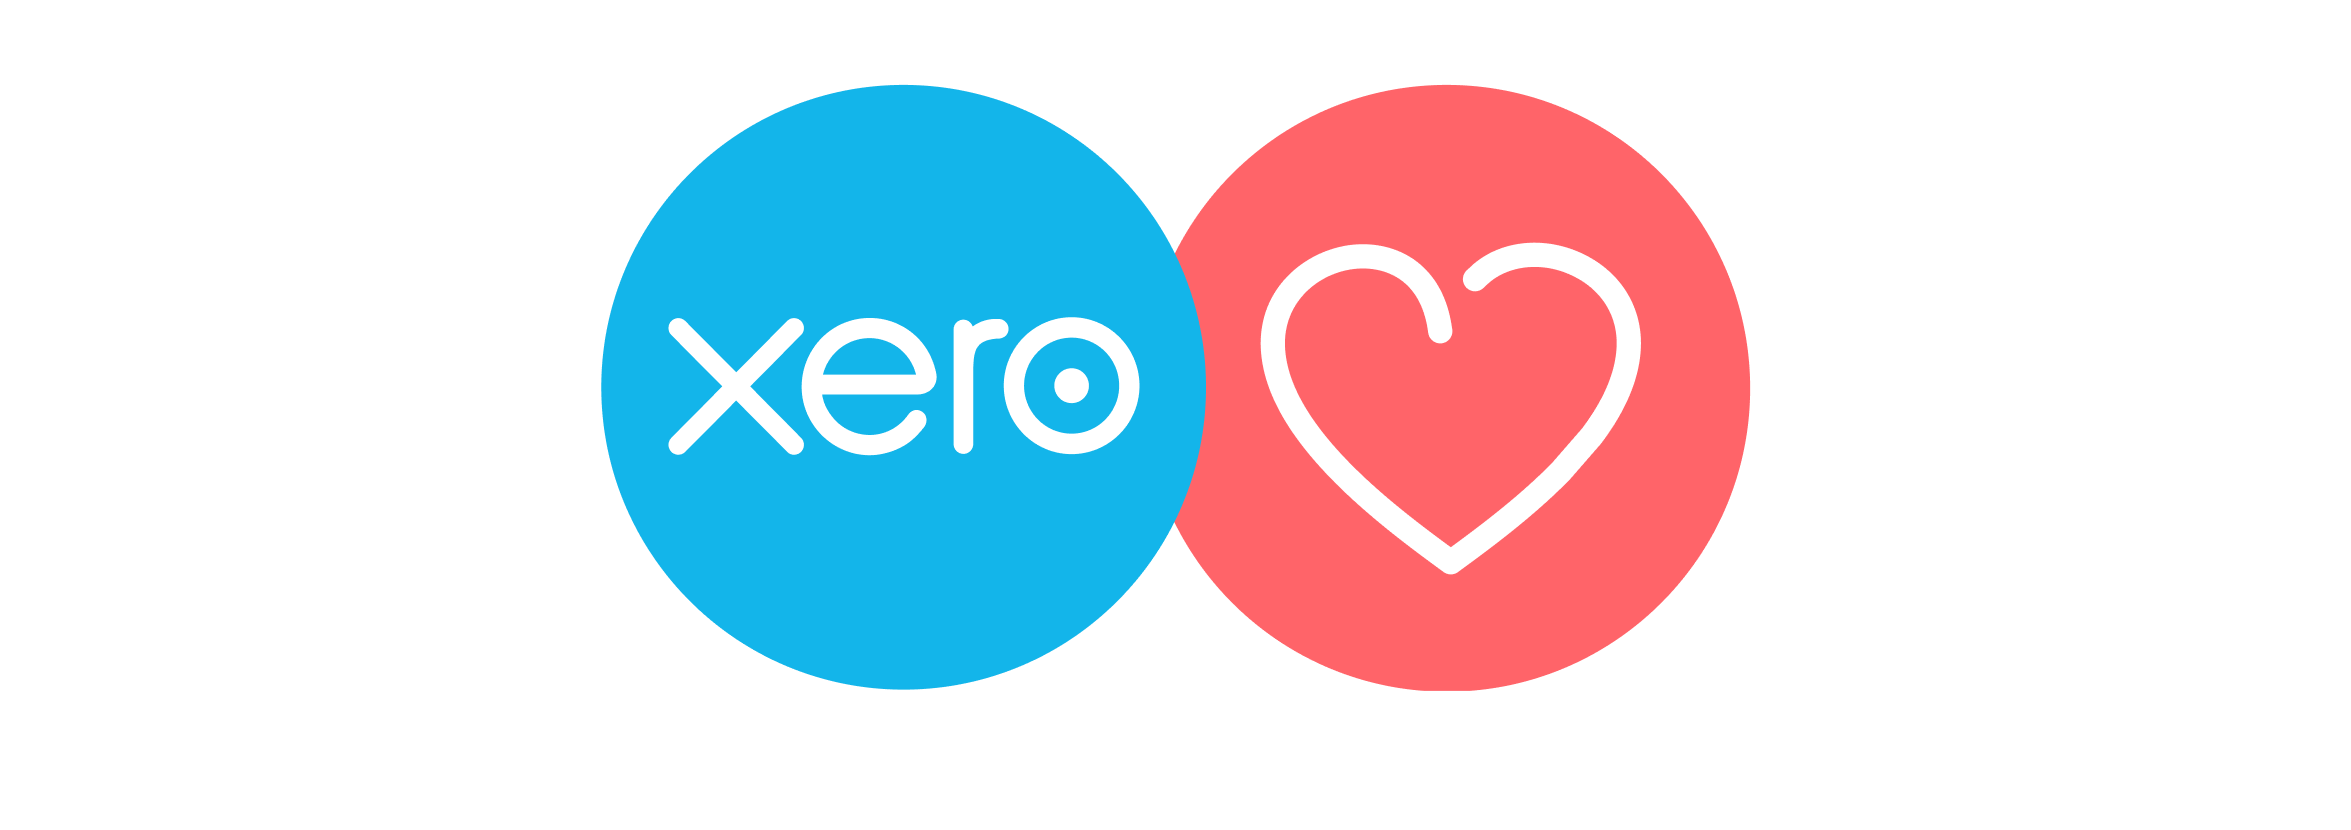 The Xero logo and an icon of a heart.